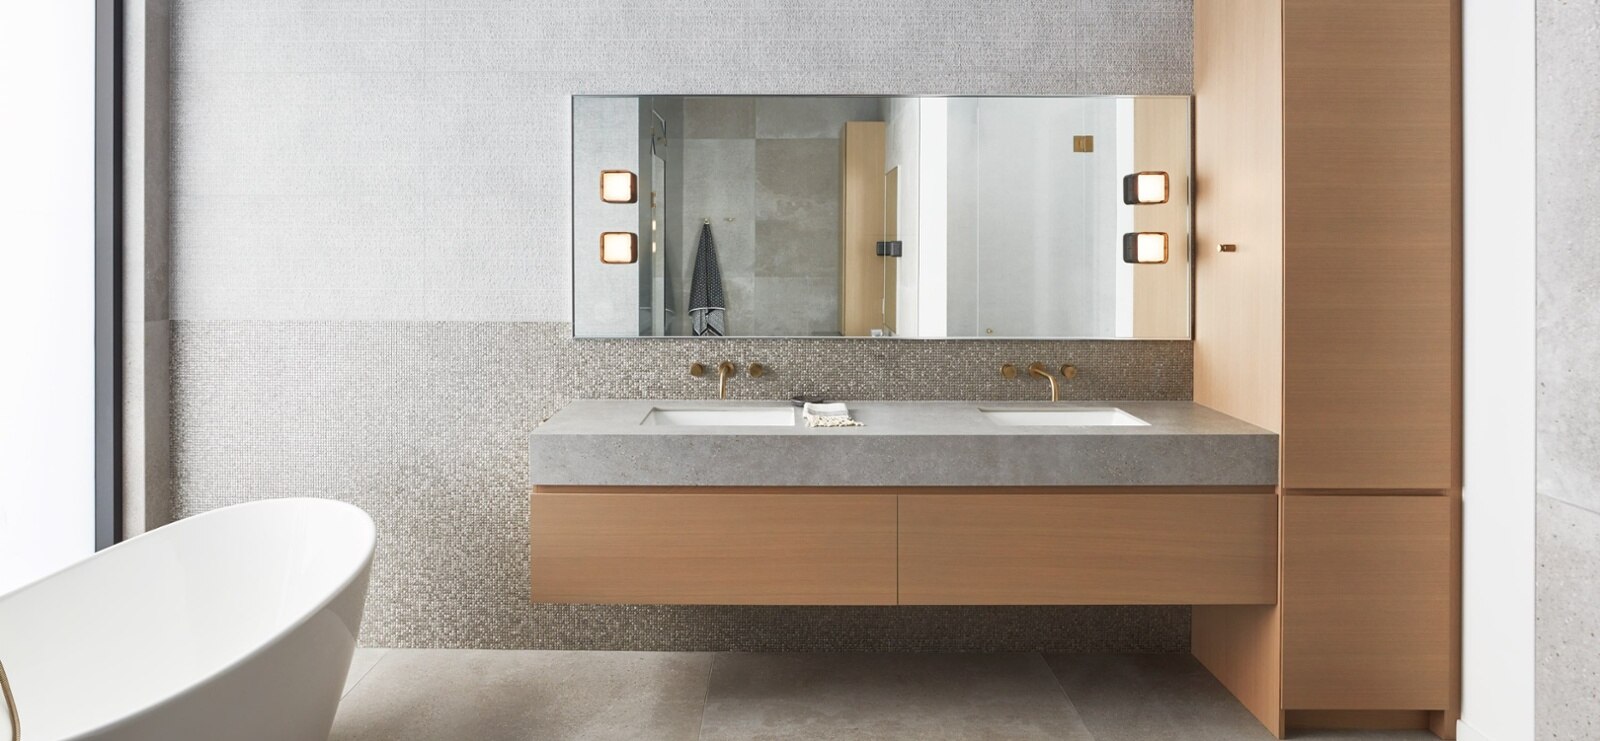 natural stone finishes in custom modern bathroom-1-1-1